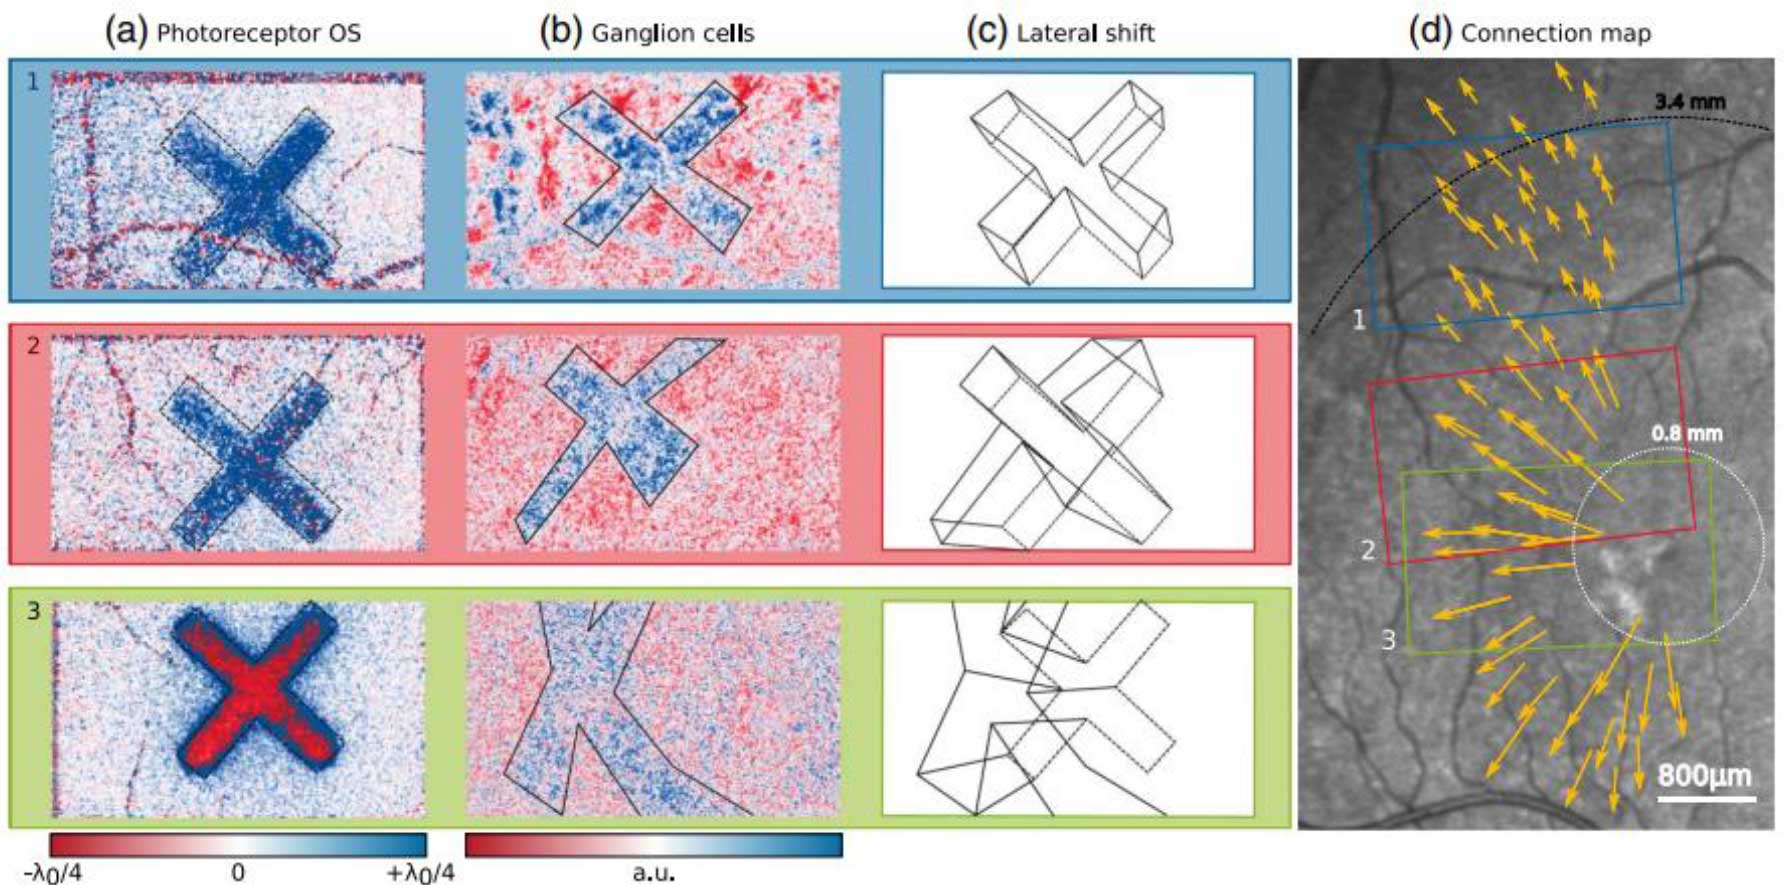 © Optics Letters: Clara Pfäffle, Hendrik Spahr et al, “Simultaneous functional imaging of neuronal and photoreceptor layers in living human retina,” Opt. Lett. 44(23), 5671-5674 (2019)